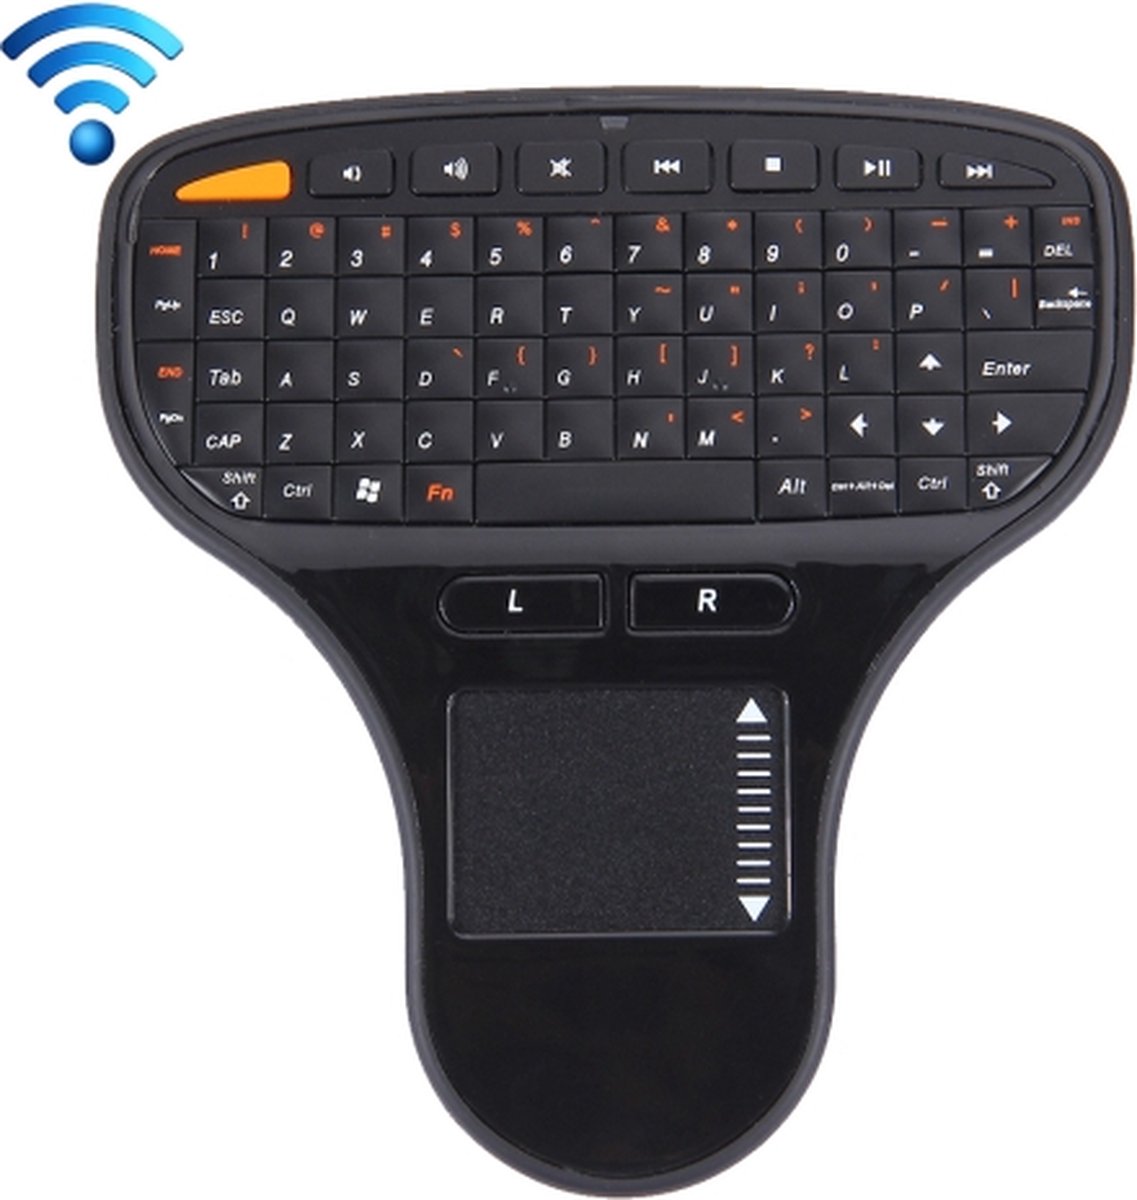 N5903 2,4 GHz Mini draadloos toetsenbord met touchpad & USB Mini-ontvanger, Afmetingen: 127 x 134 x 25 mm (zwart)